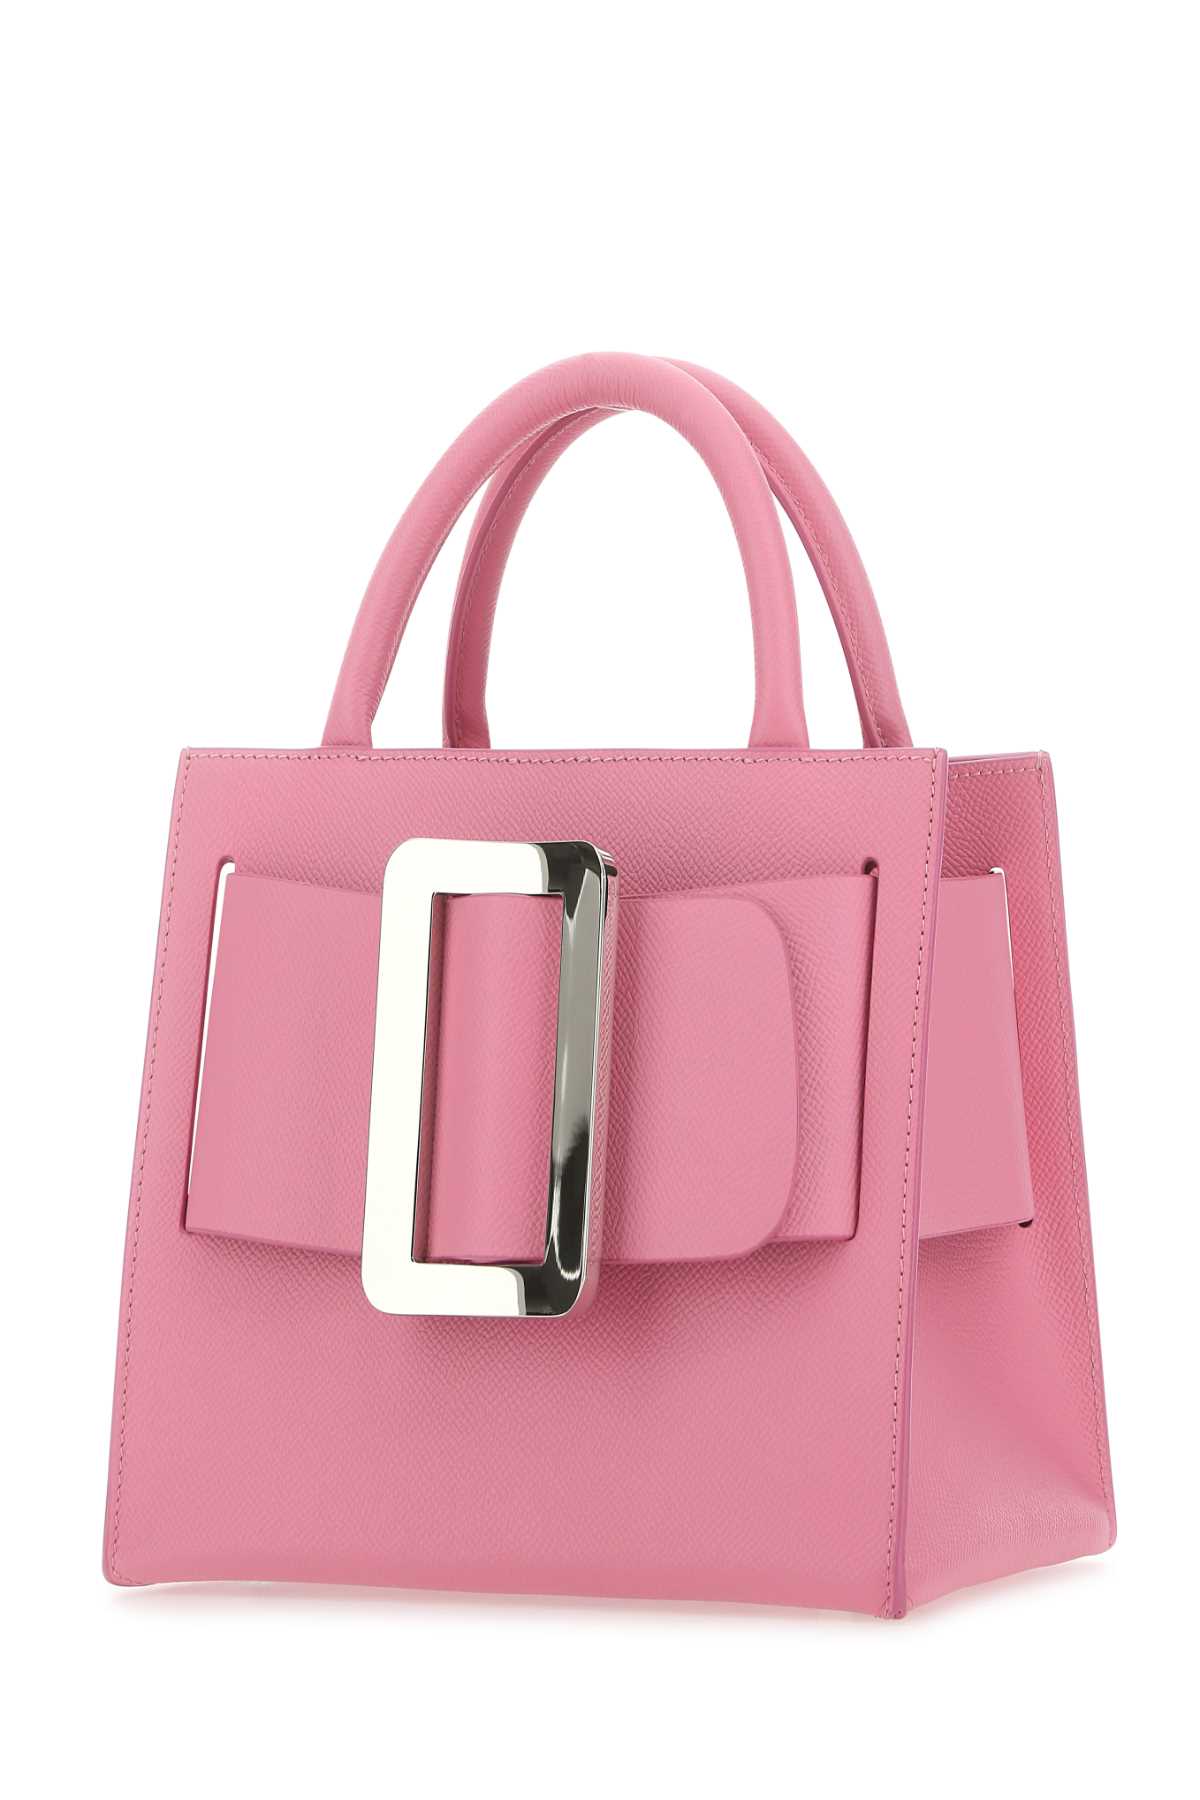 Boyy Pink Leather Bobby 23 Handbag In Bubgum